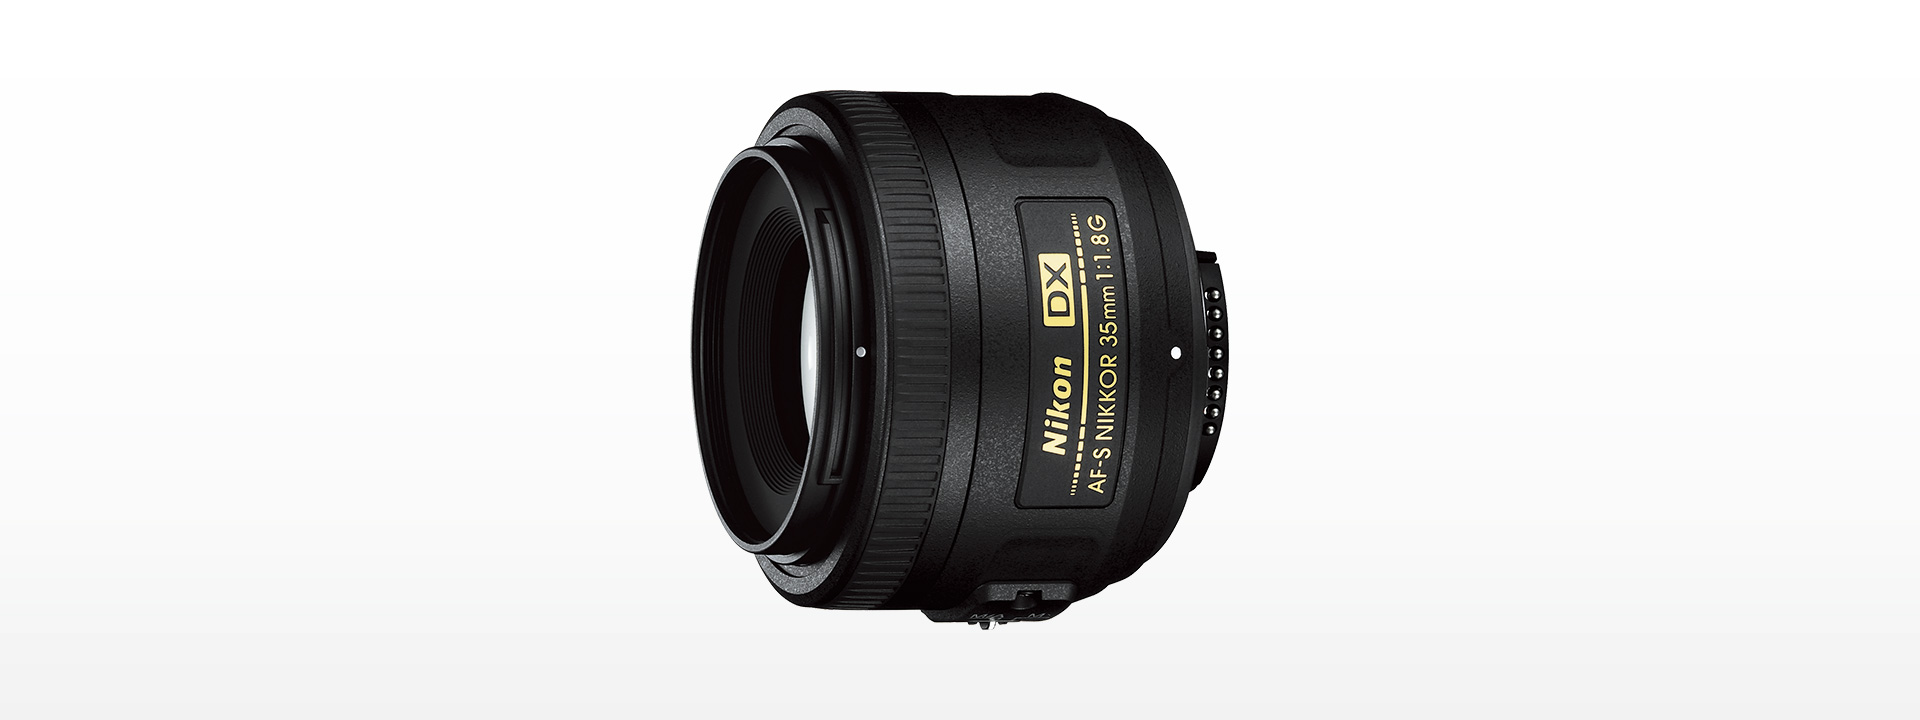 単焦点 ニコン Nikon AF-S DX NIKKOR 35mm F1.8G